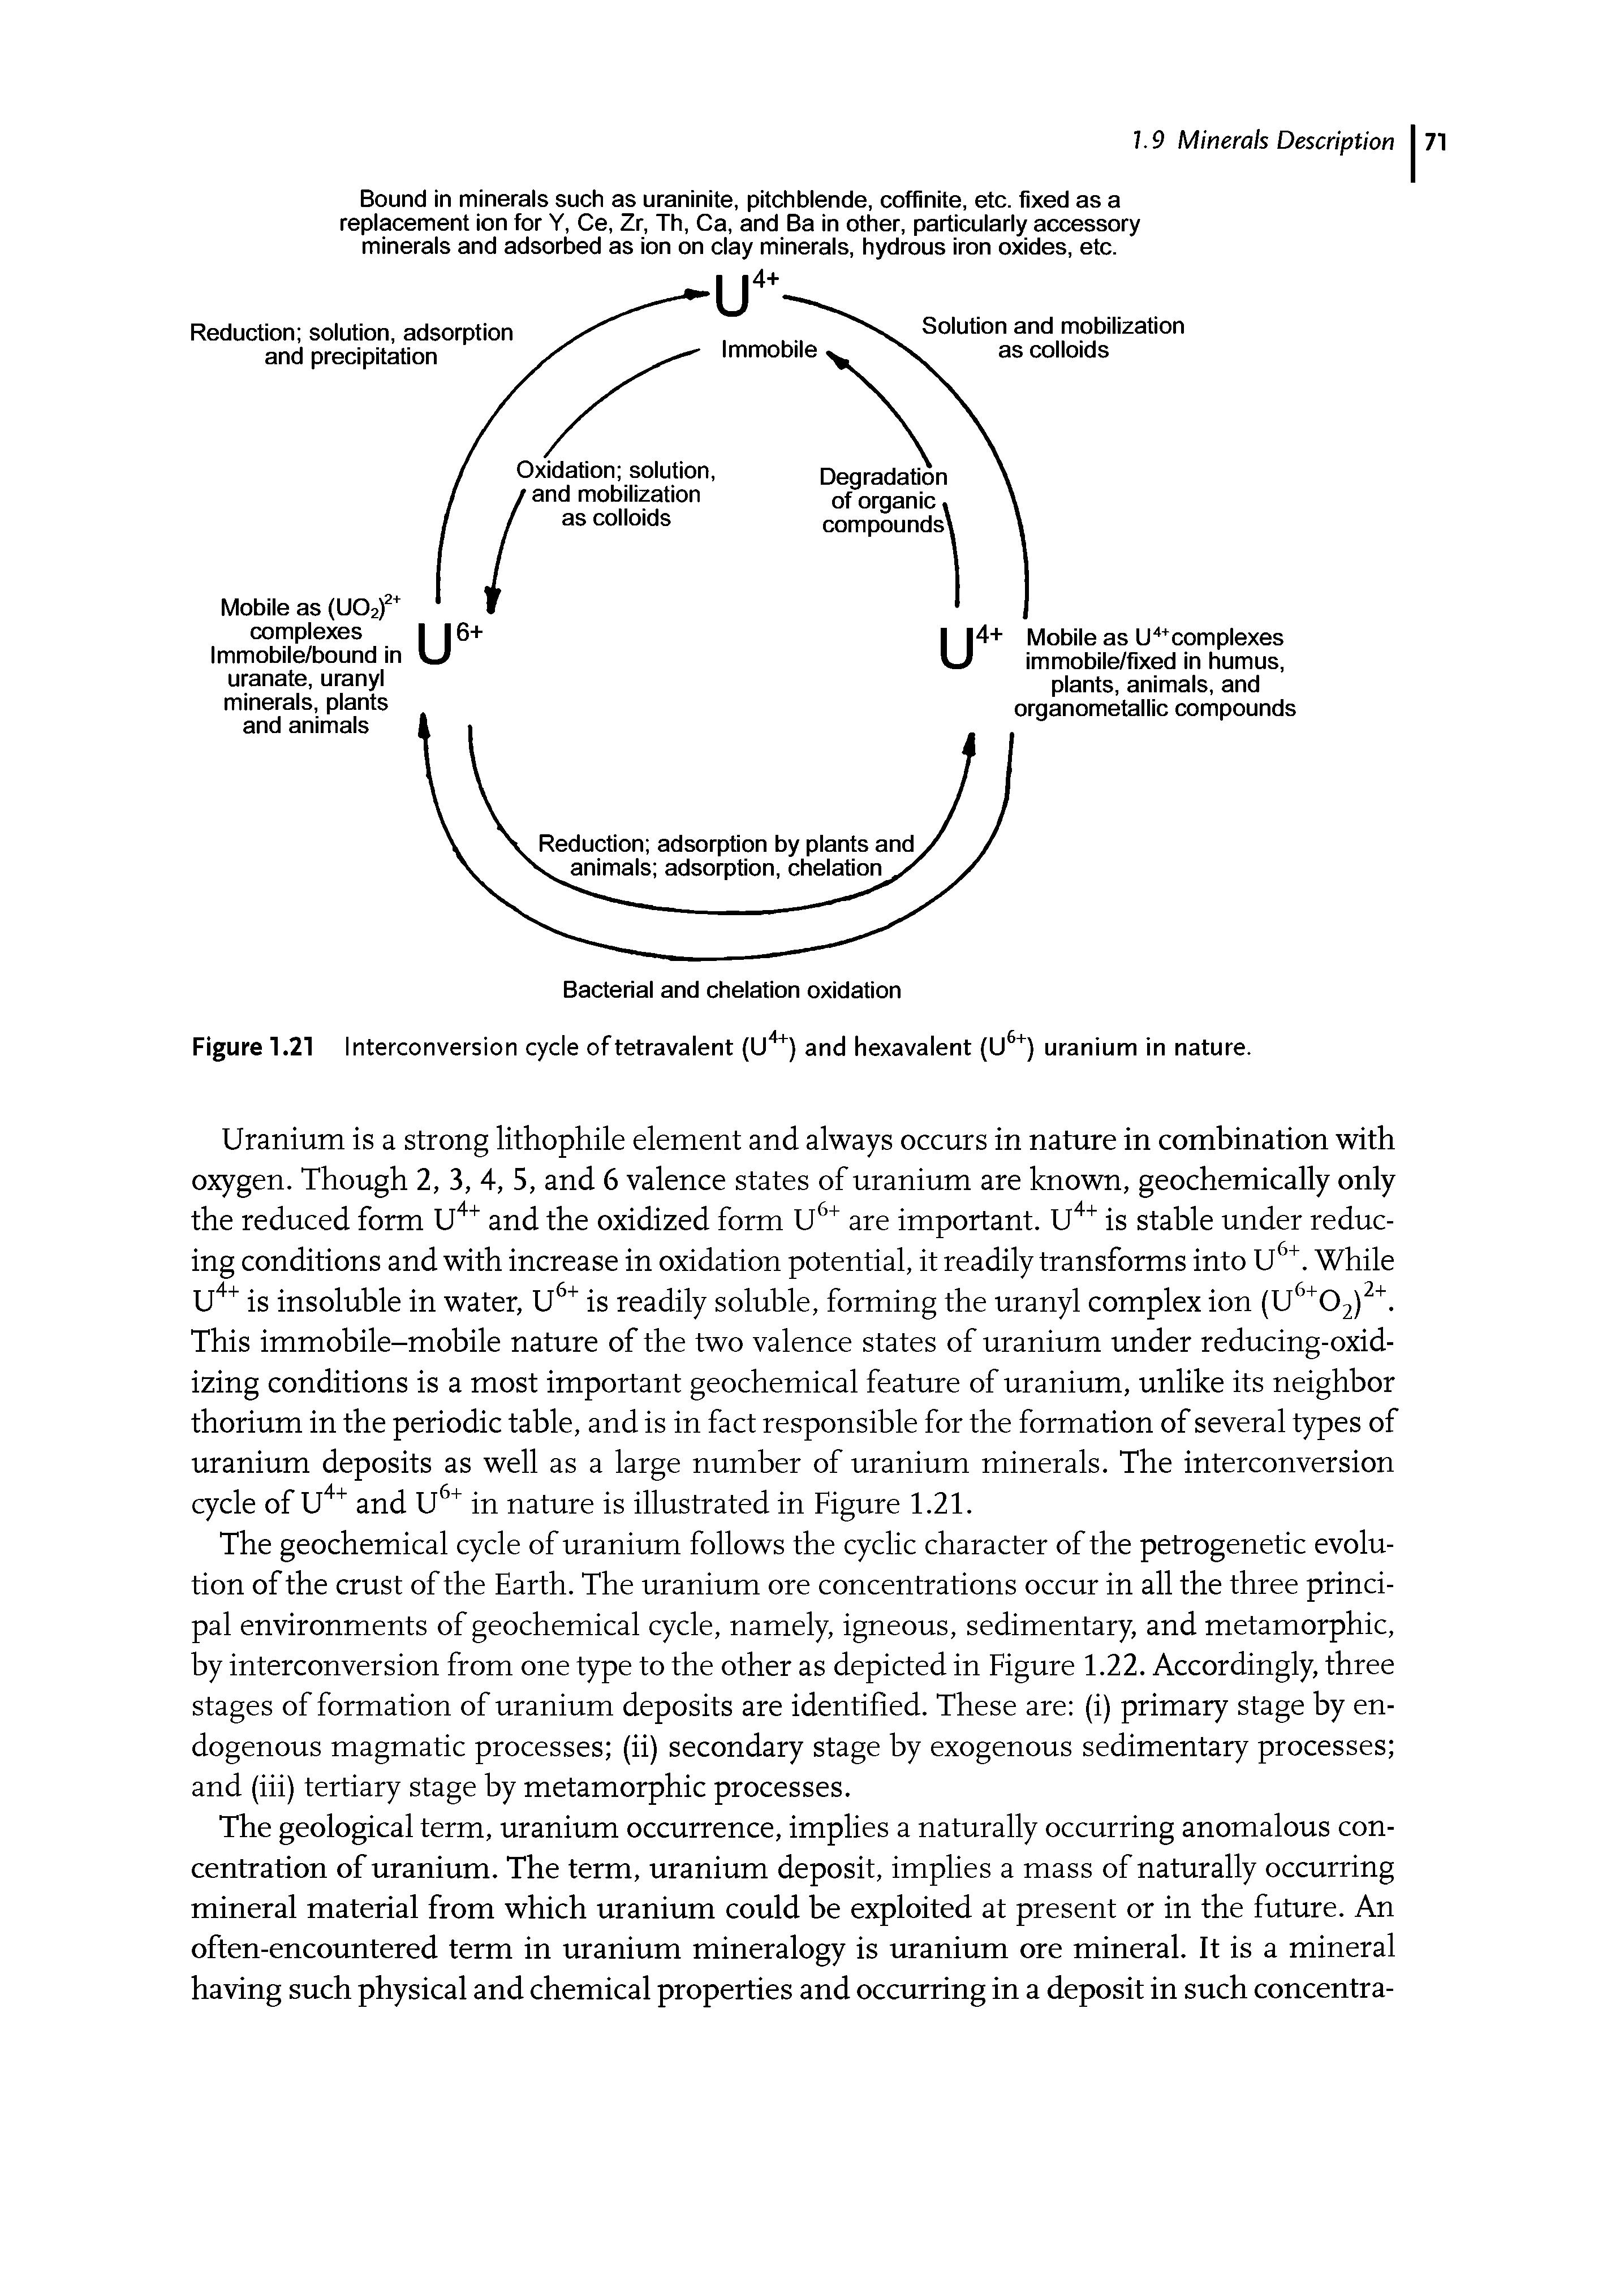 Figure 1.21 Interconversion cycle oftetravalent (U4+) and hexavalent (U6+) uranium in nature.